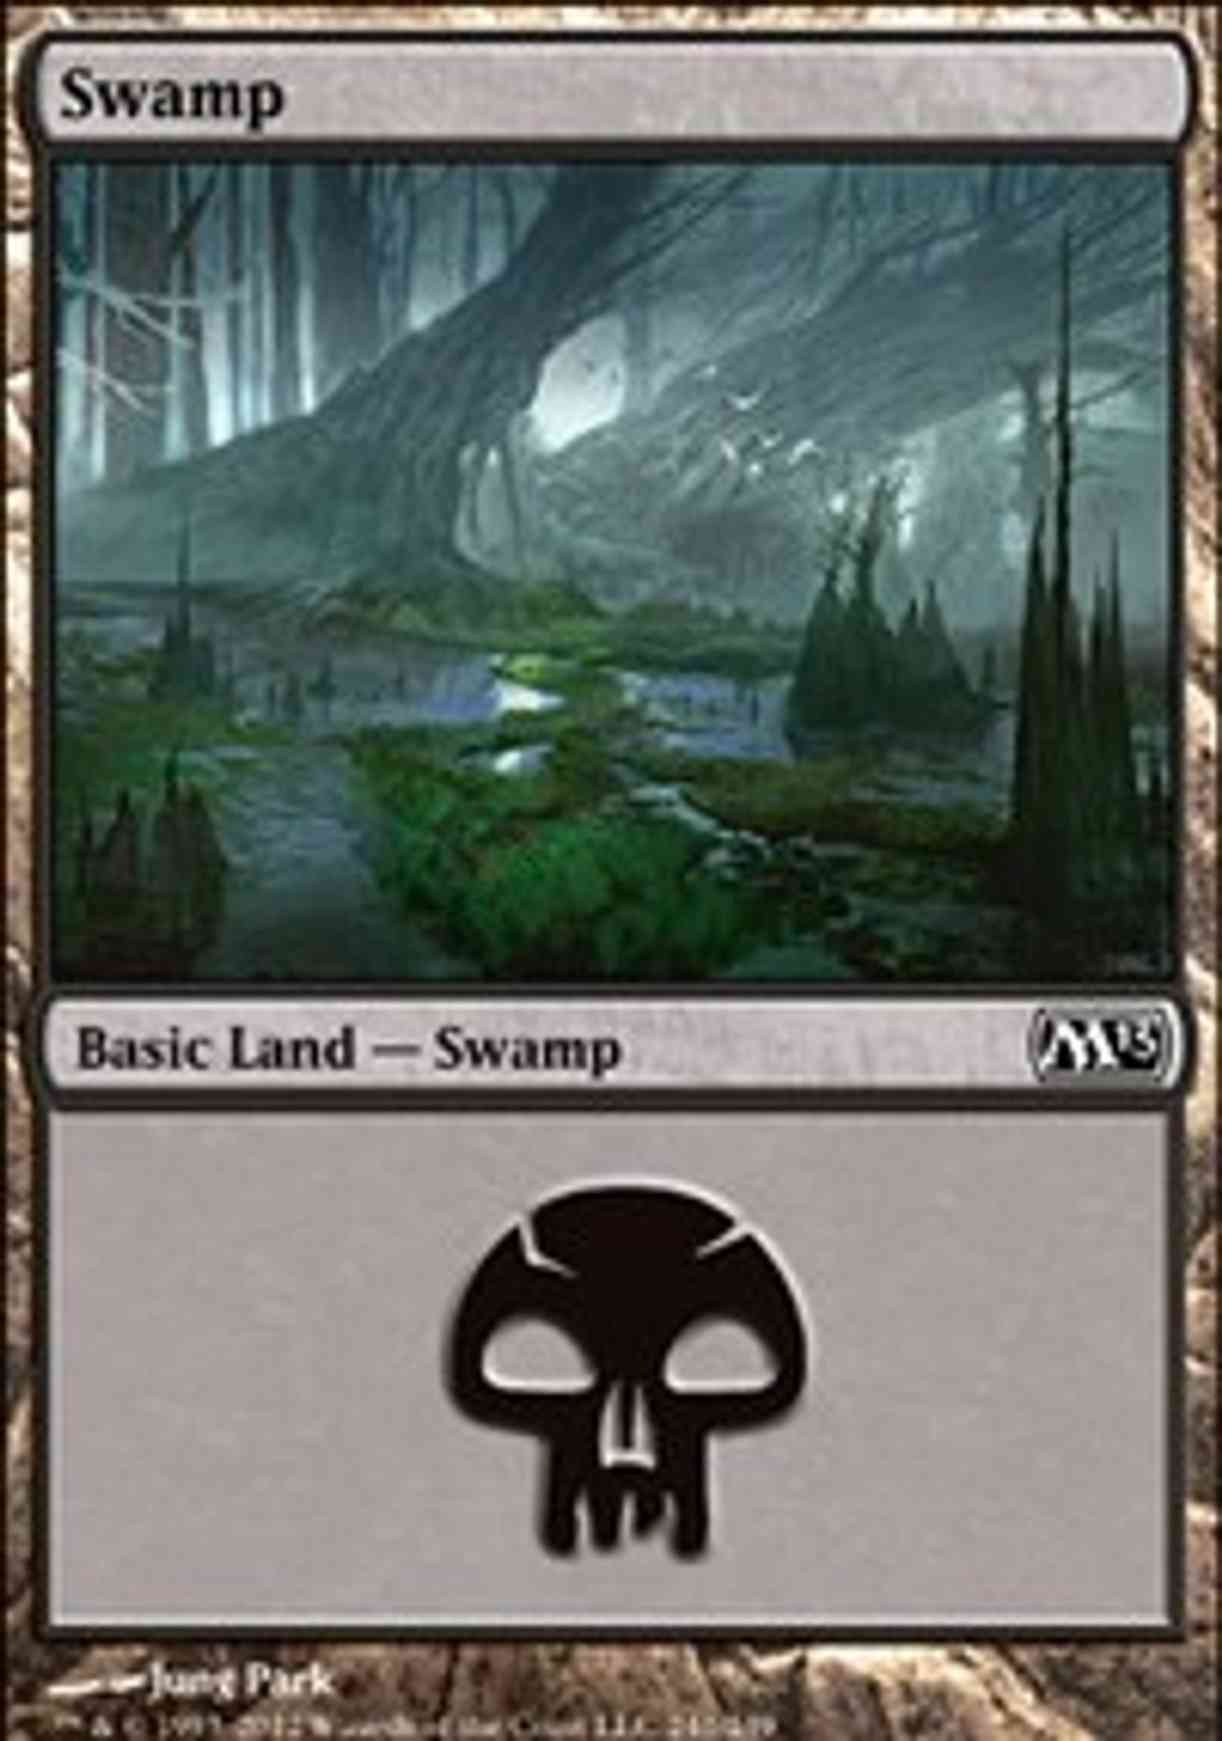 Swamp (241) magic card front